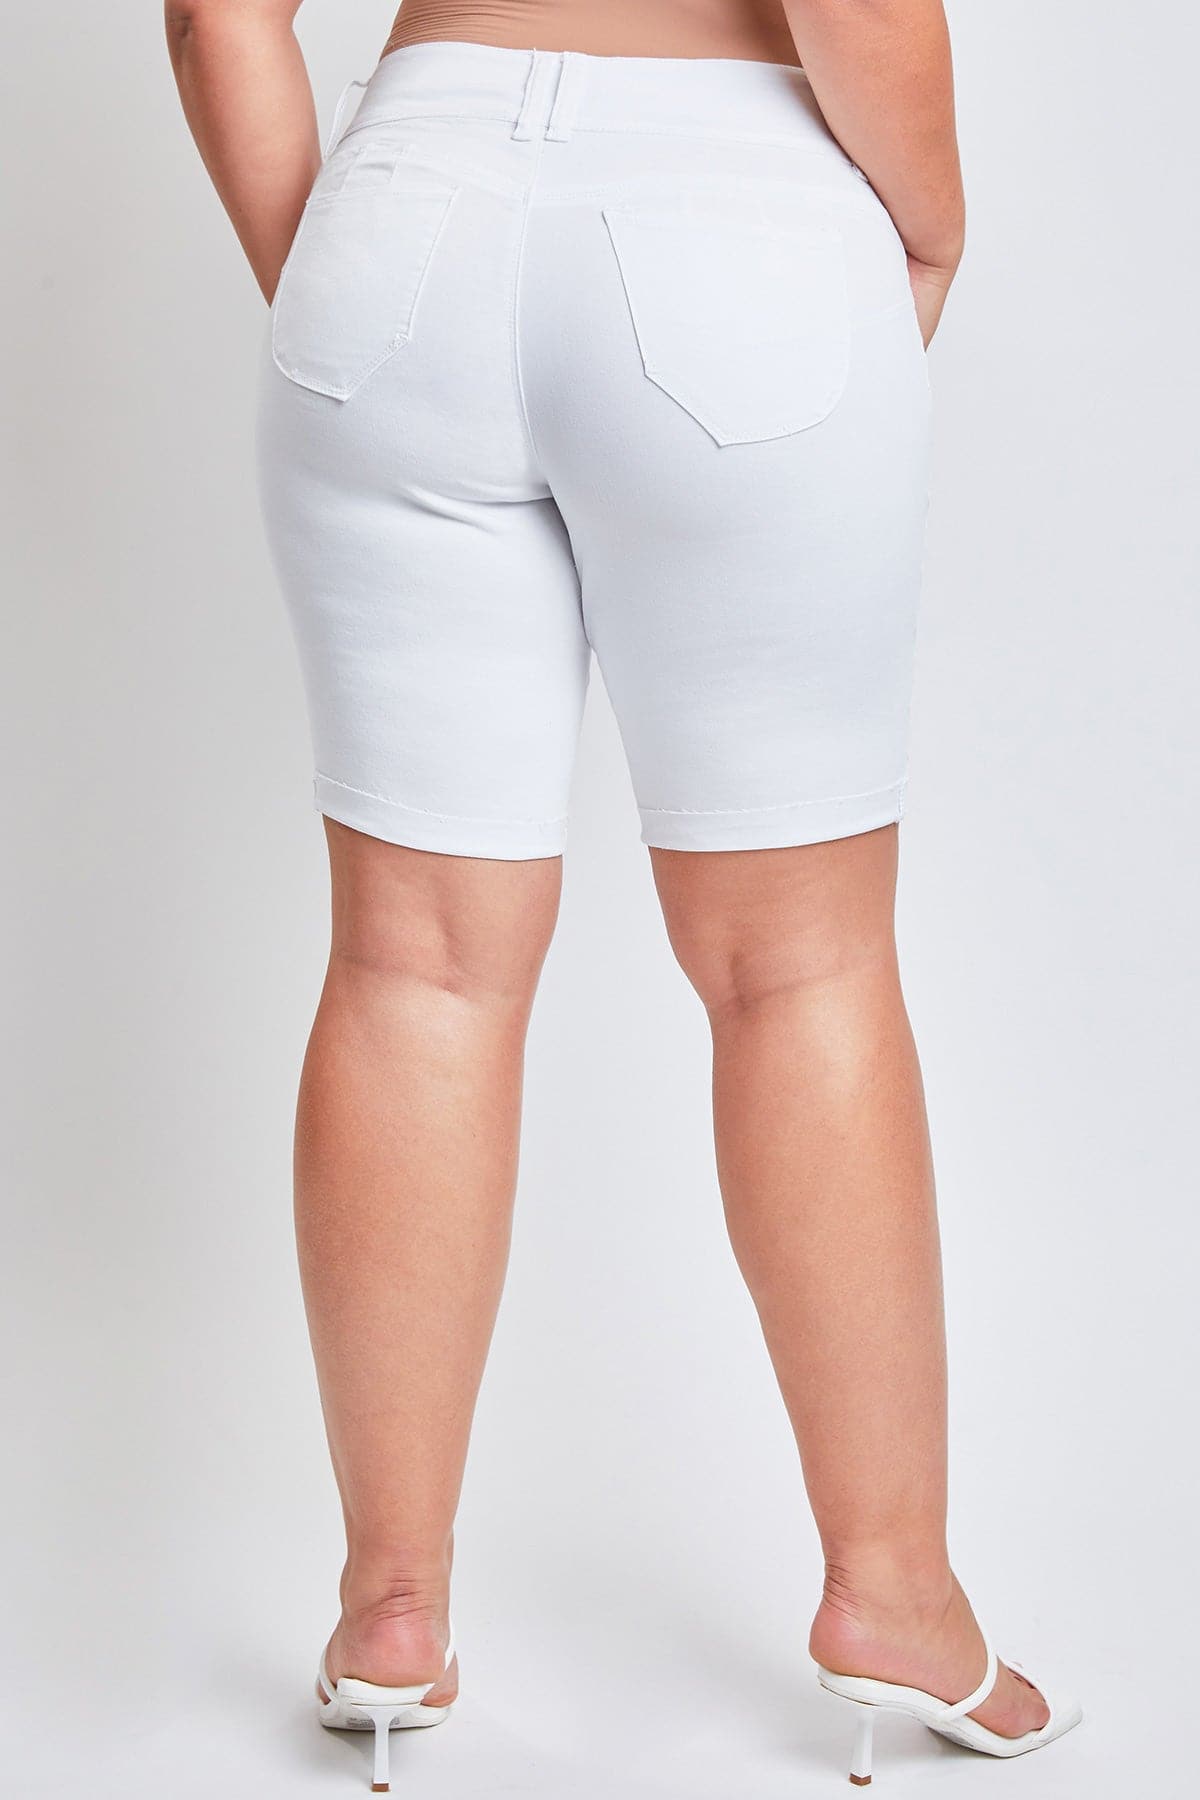 Plus Size Women's WannaBettaButt Cuffed Bermuda Shorts